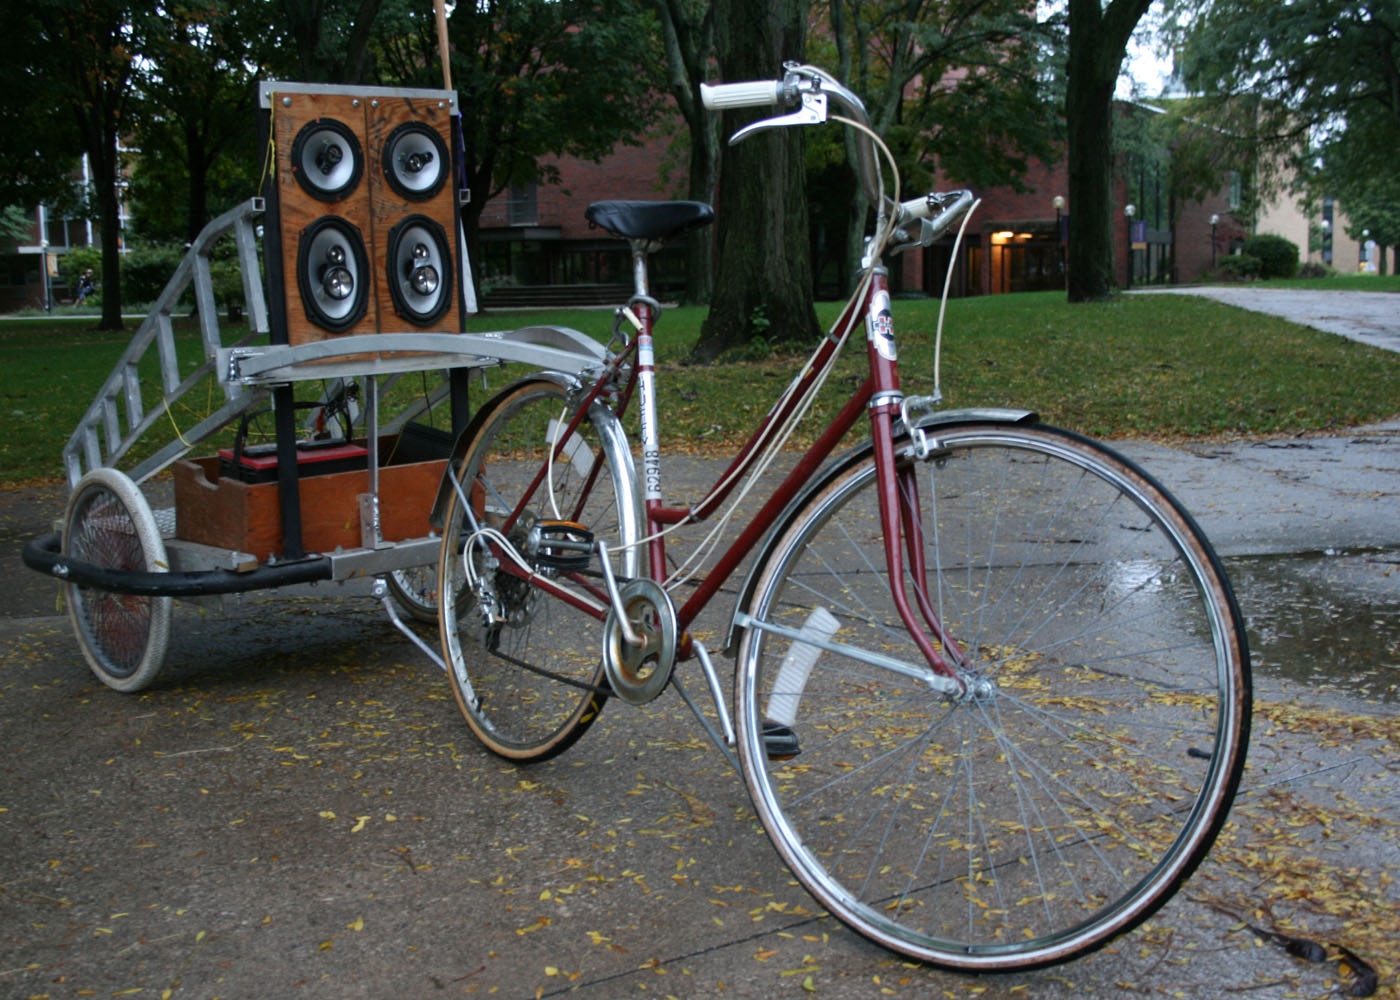 Noah Weaverdyck's bike chariot